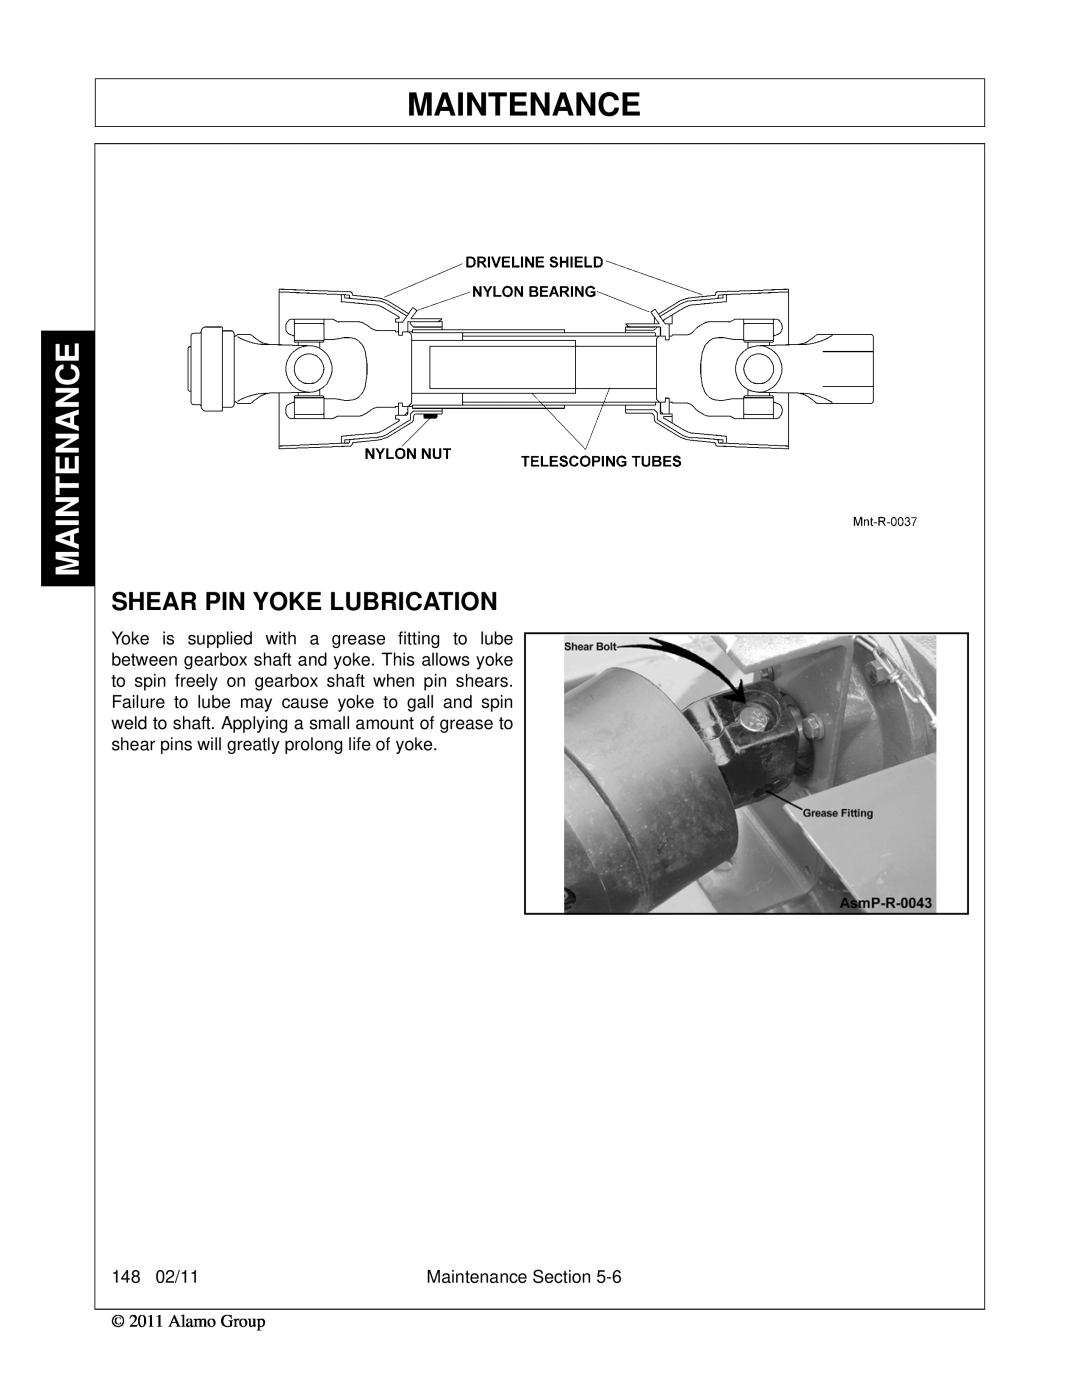 Rhino Mounts 148 manual Shear Pin Yoke Lubrication, Maintenance 